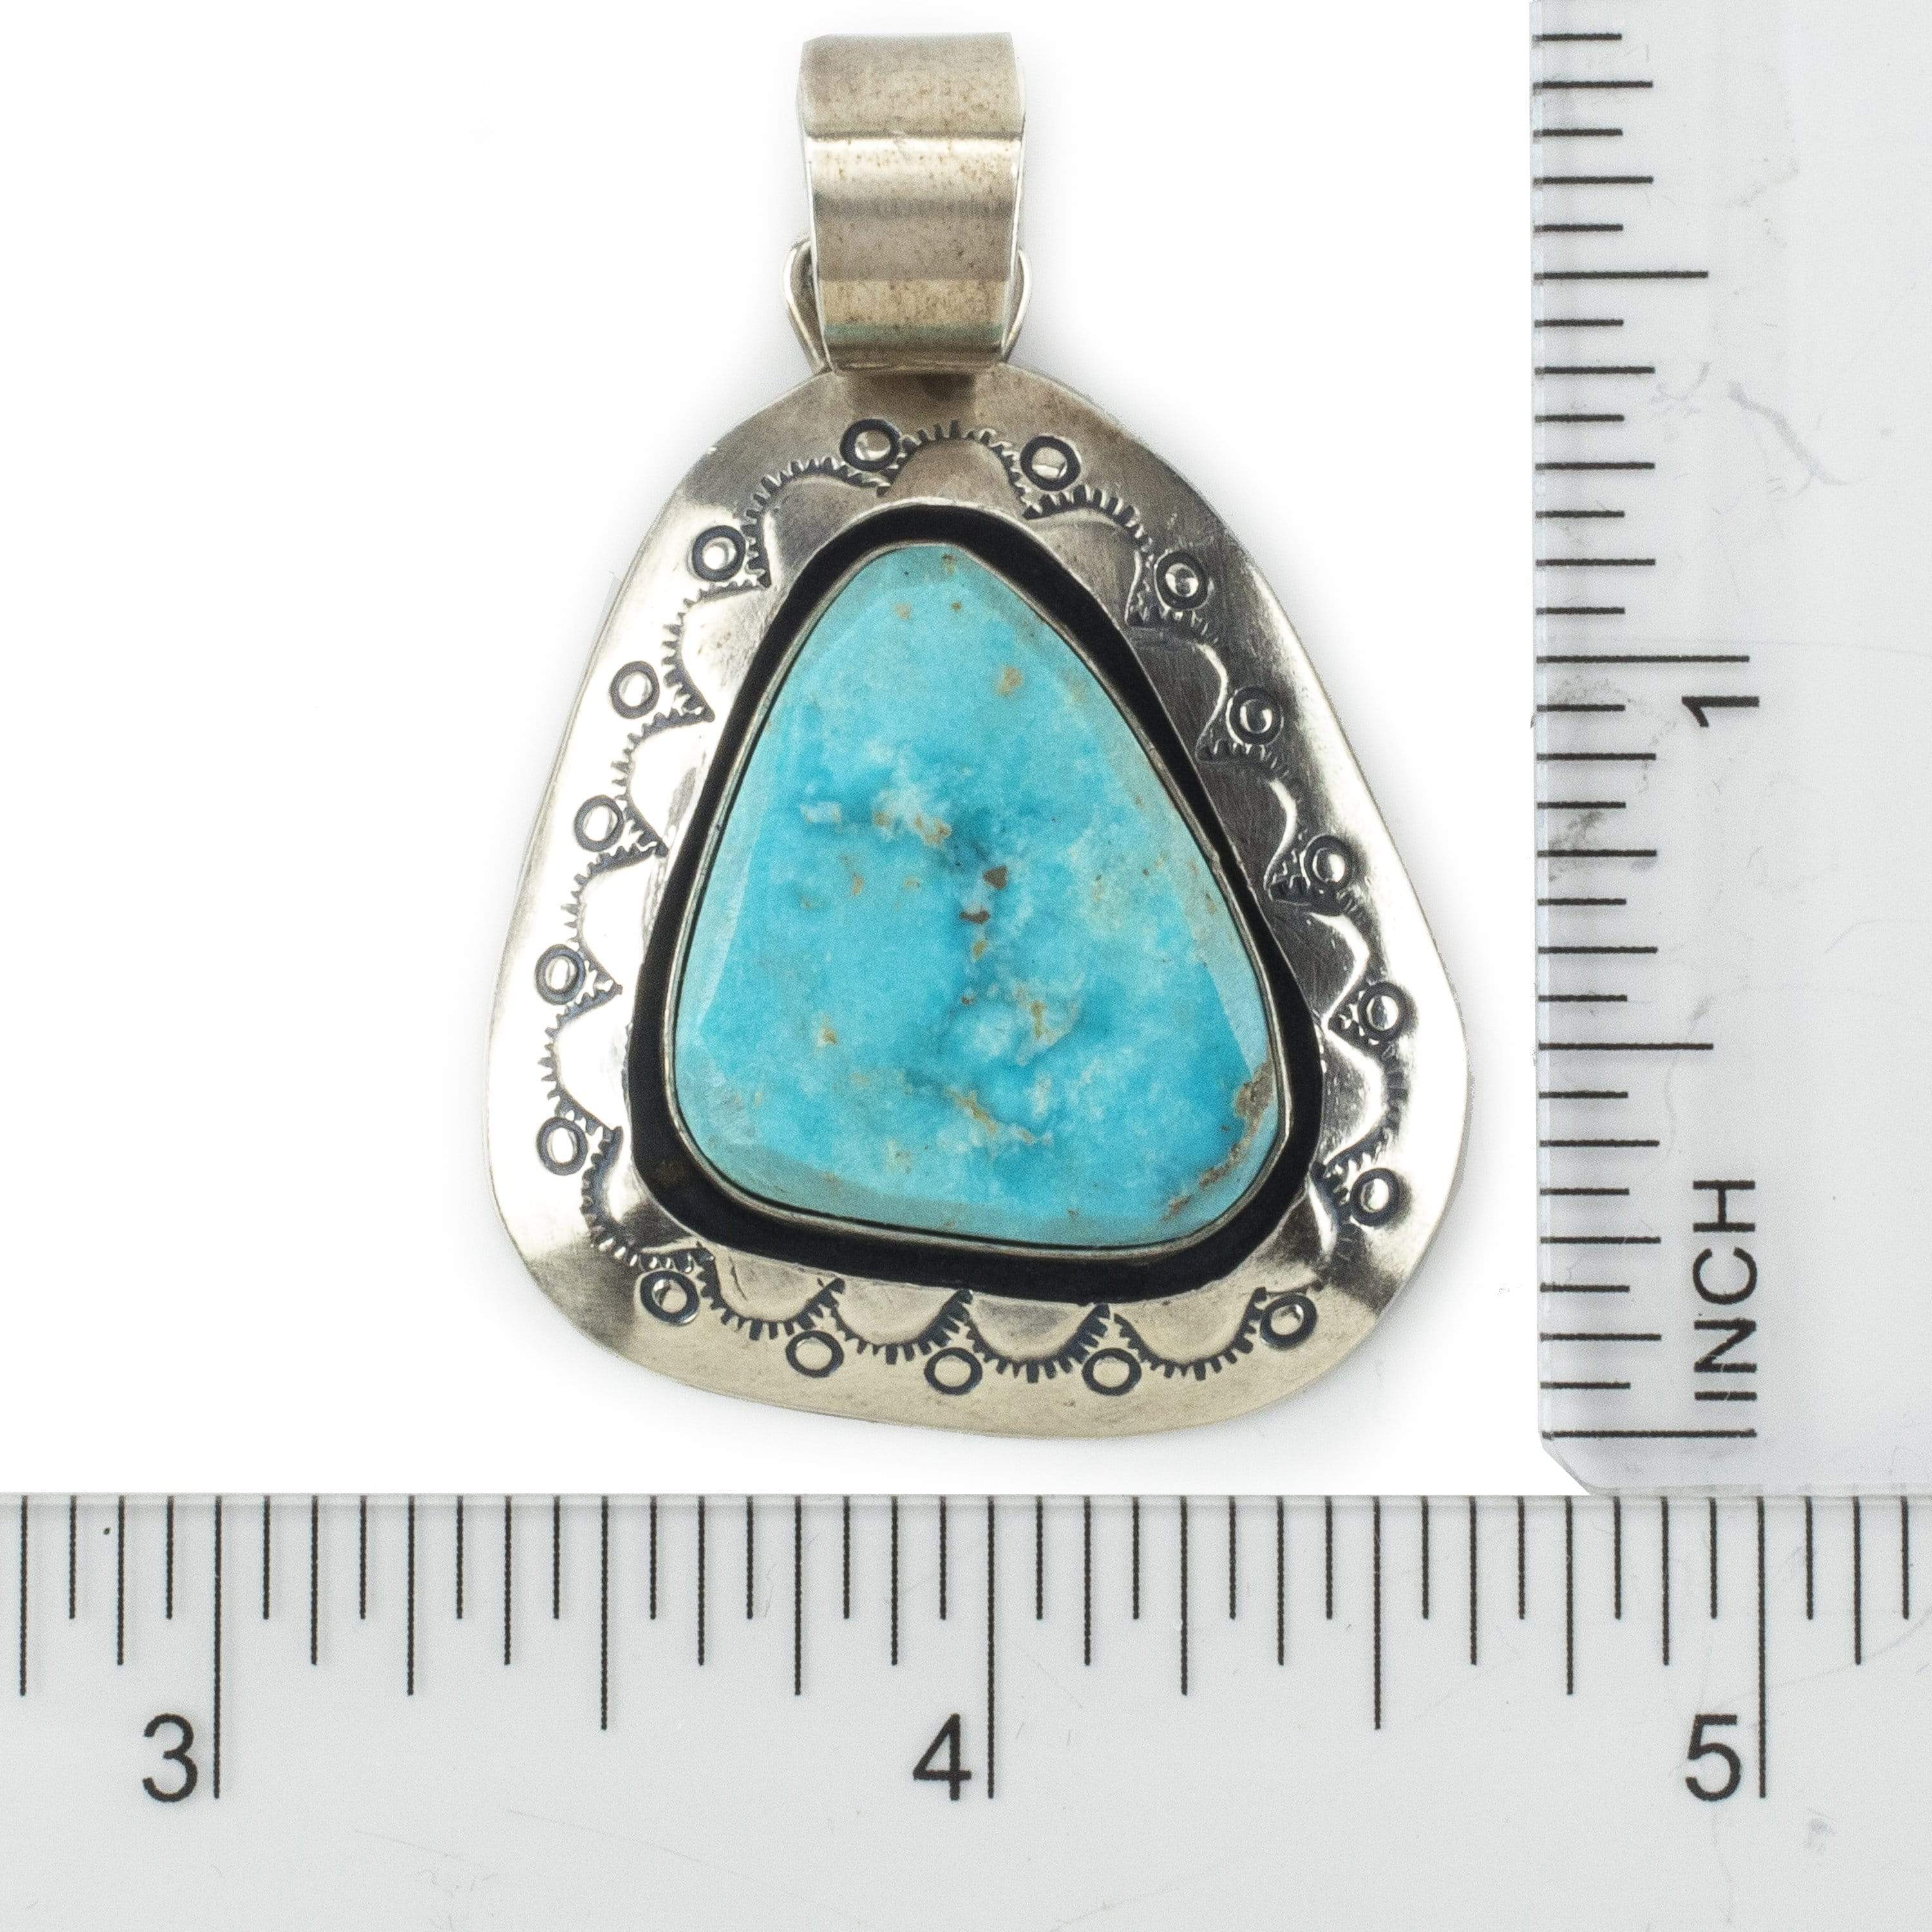 Kalifano Native American Jewelry Kingman Turquoise USA Native American Made 925 Sterling Silver Pendant NAN600.011